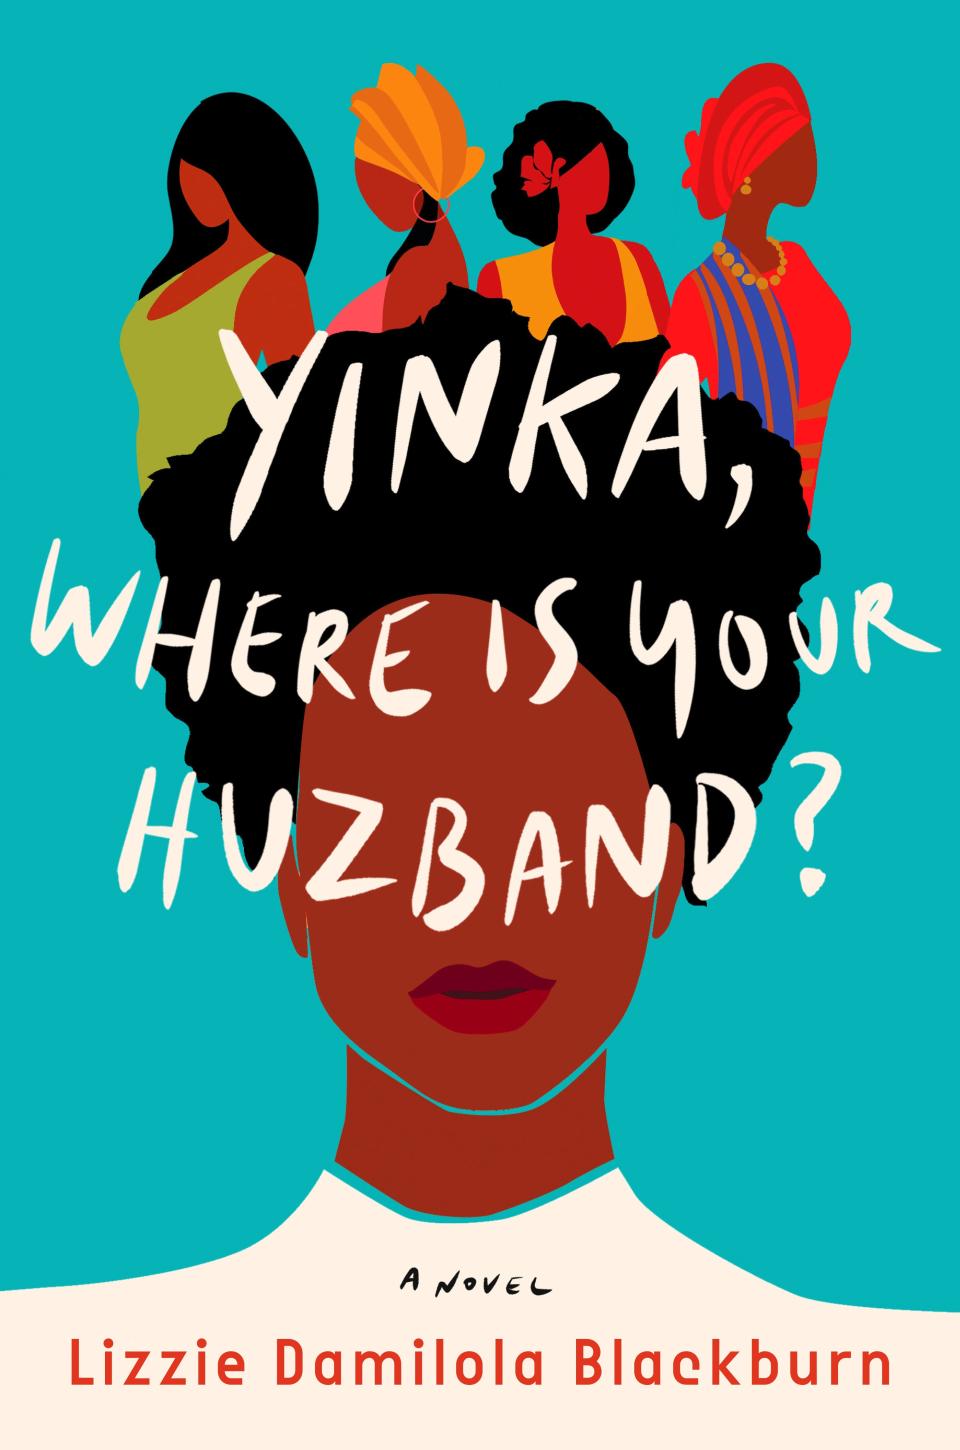 "Yinka, Where Is Your Huzband," by Lizzie Damilola Blackburn